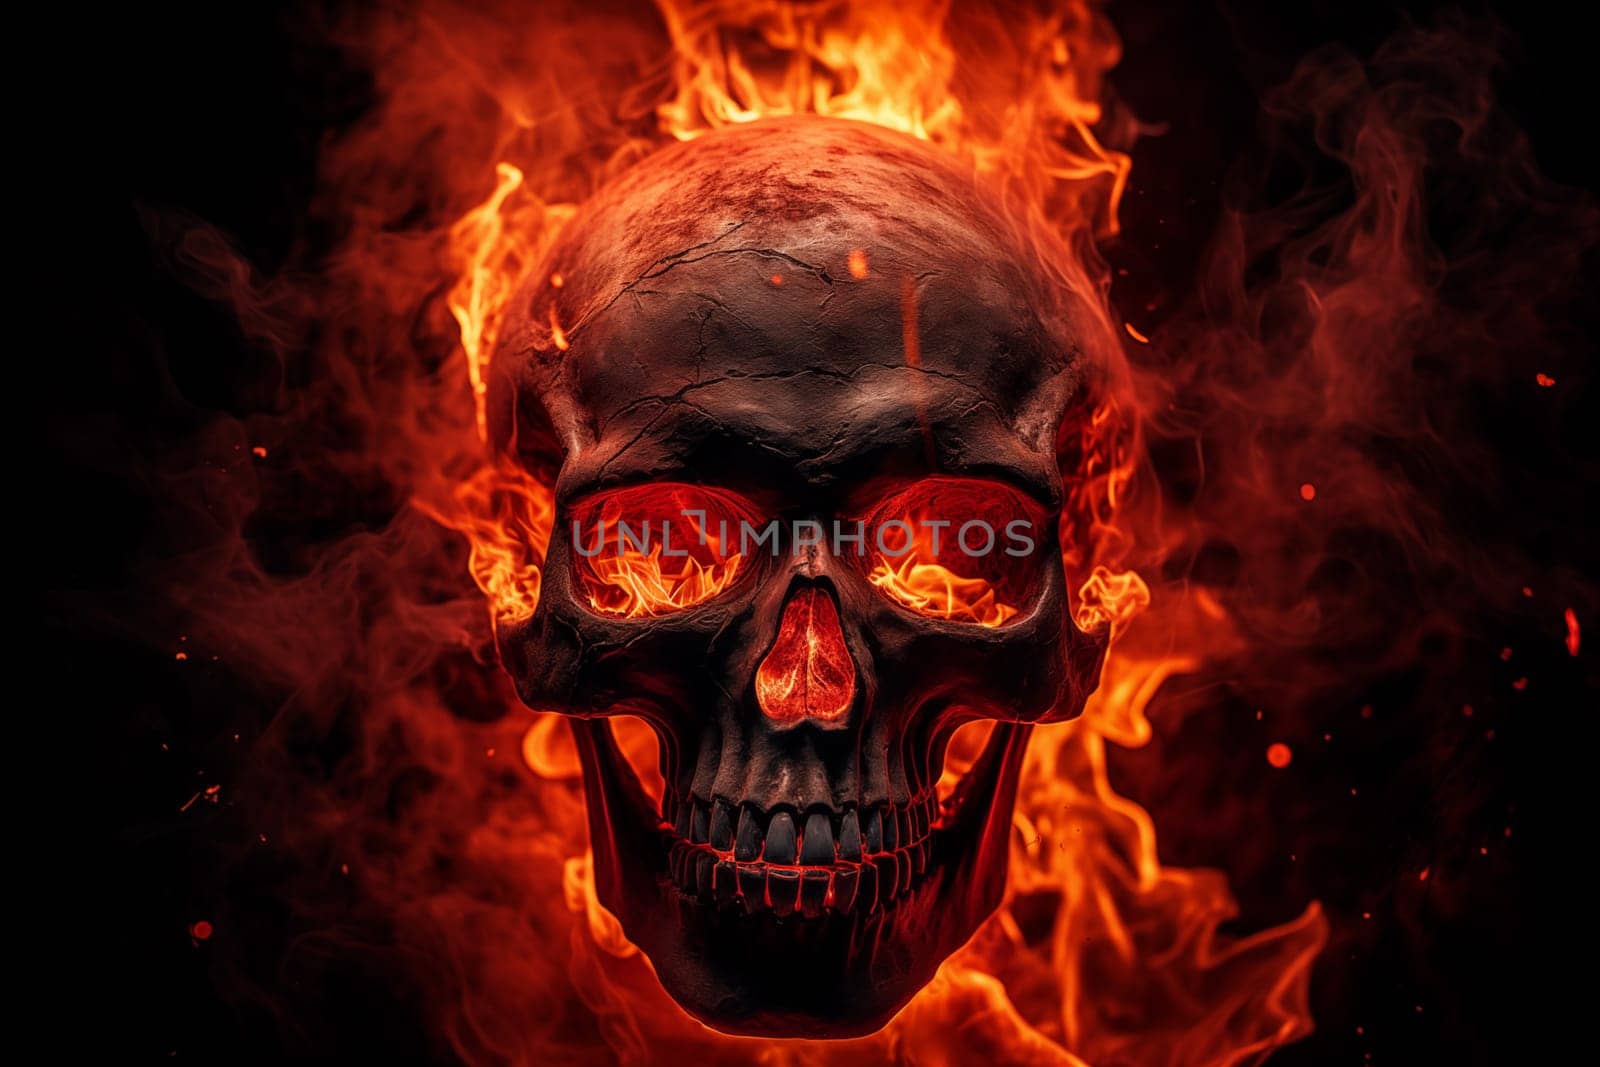 Burning Skull on Dark Background by dimol